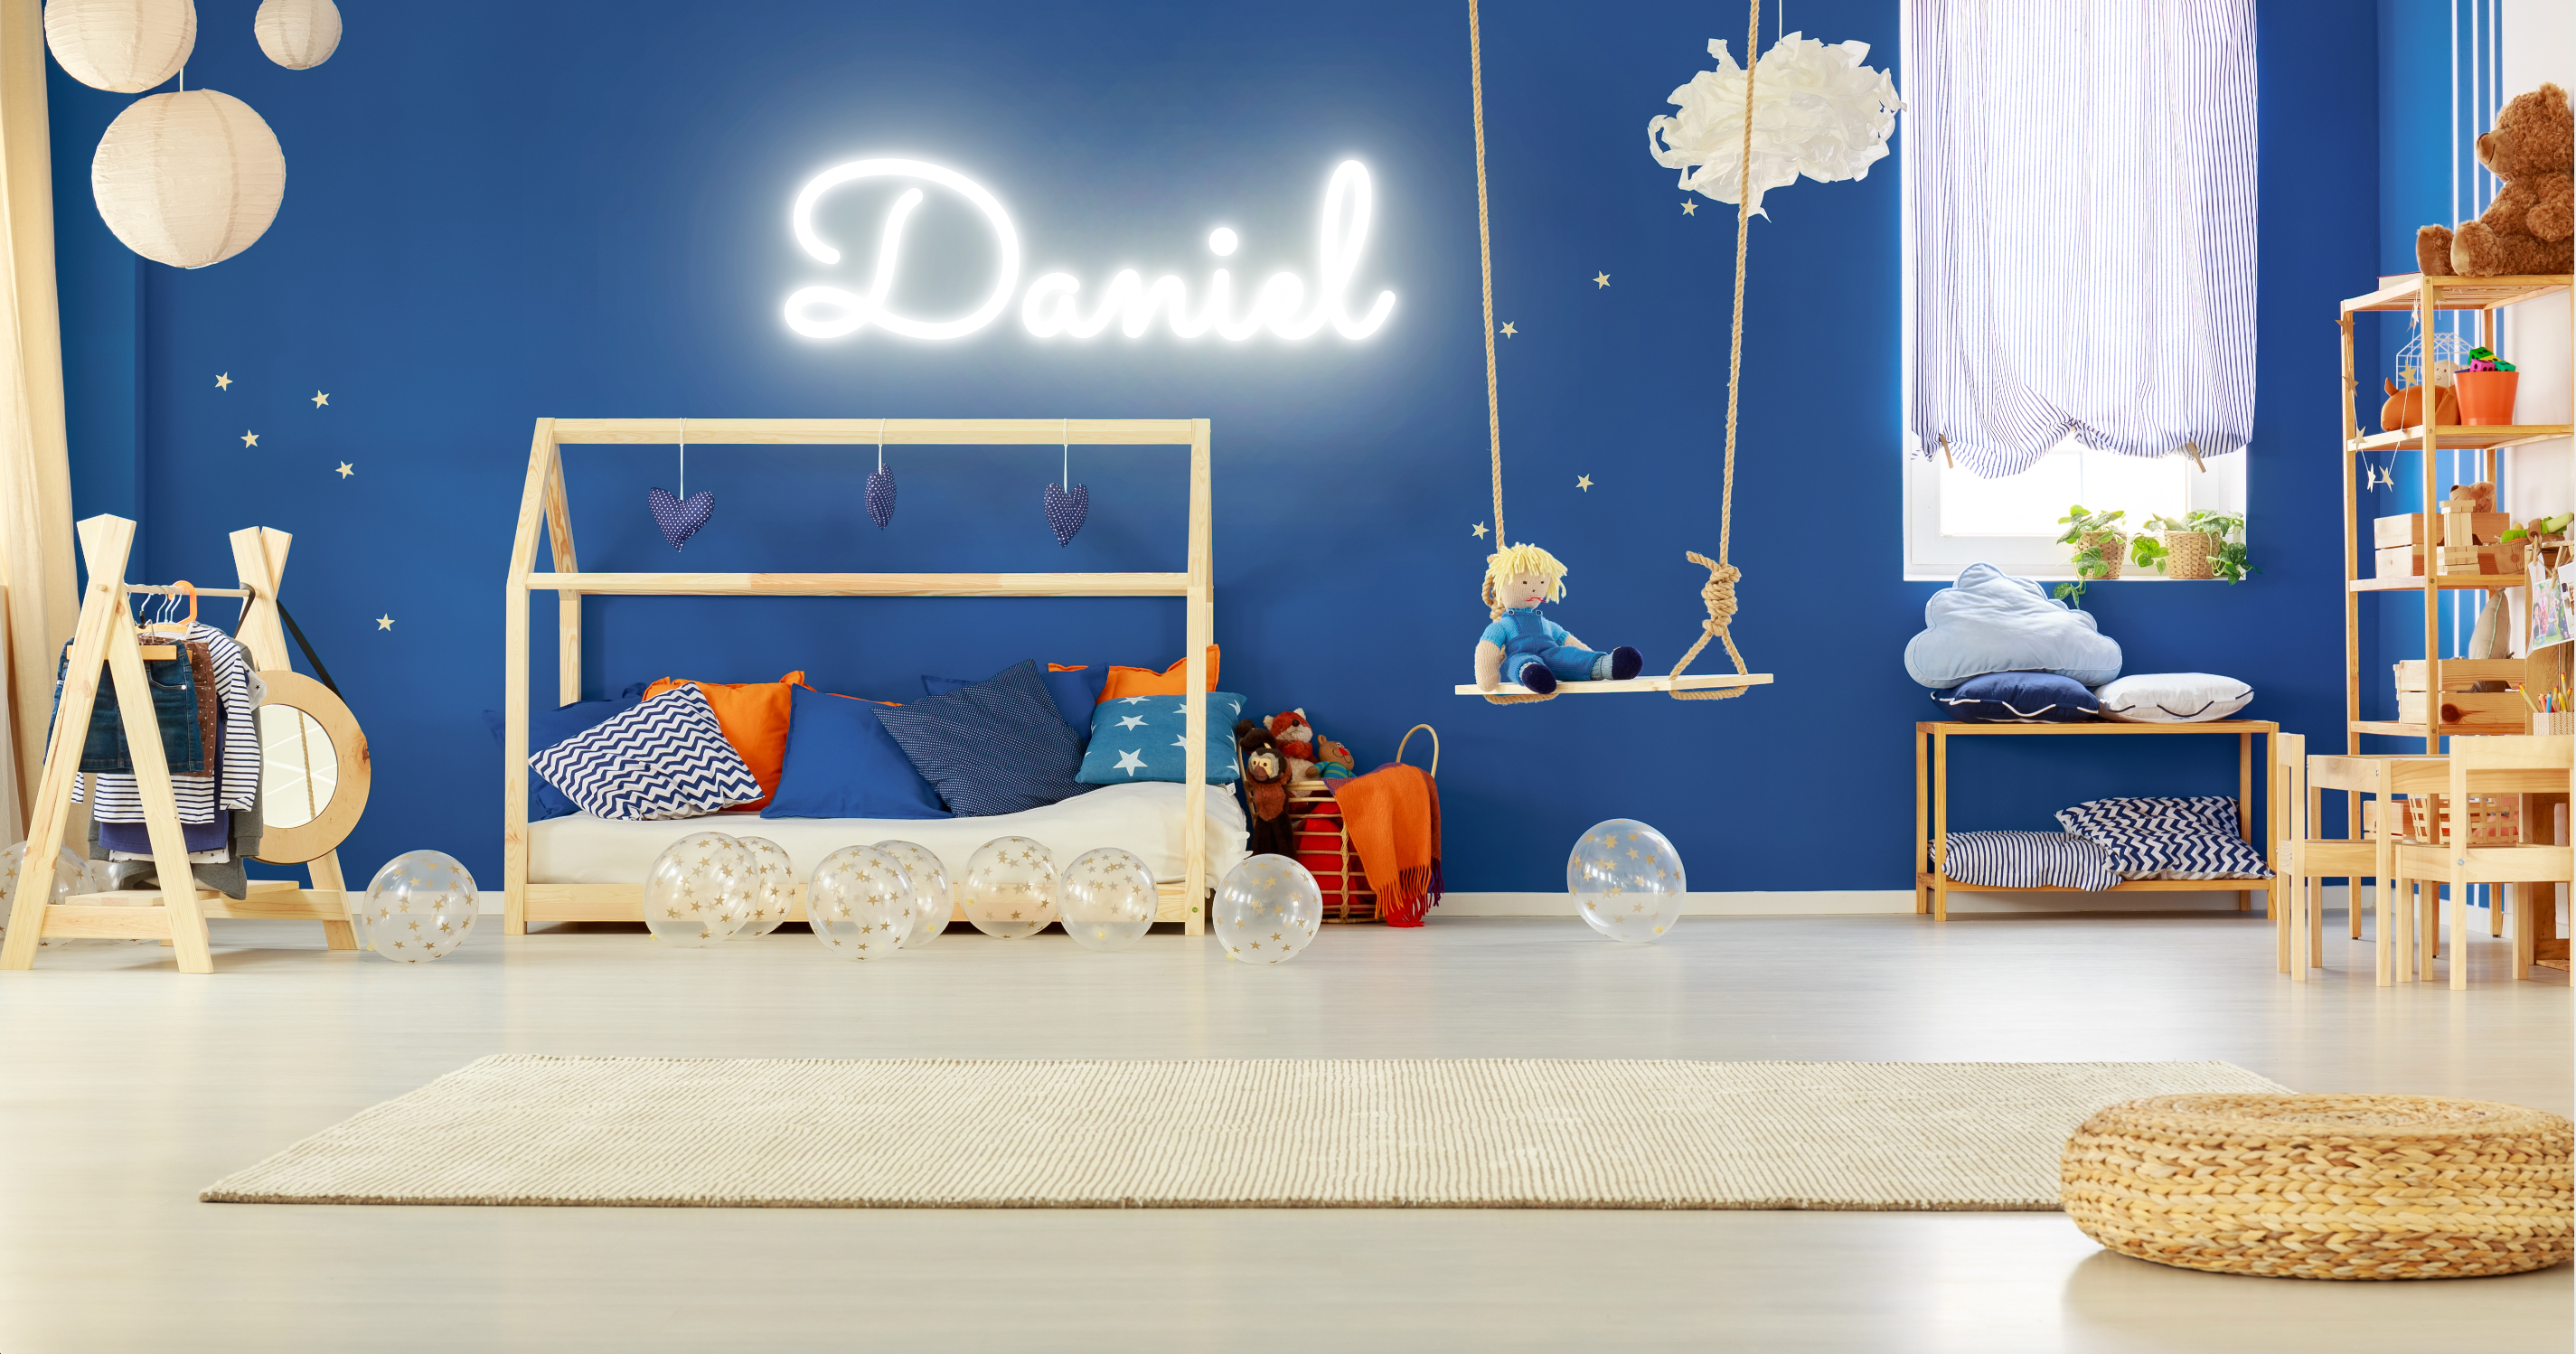 "Danial" Baby Name LED Neon Sign